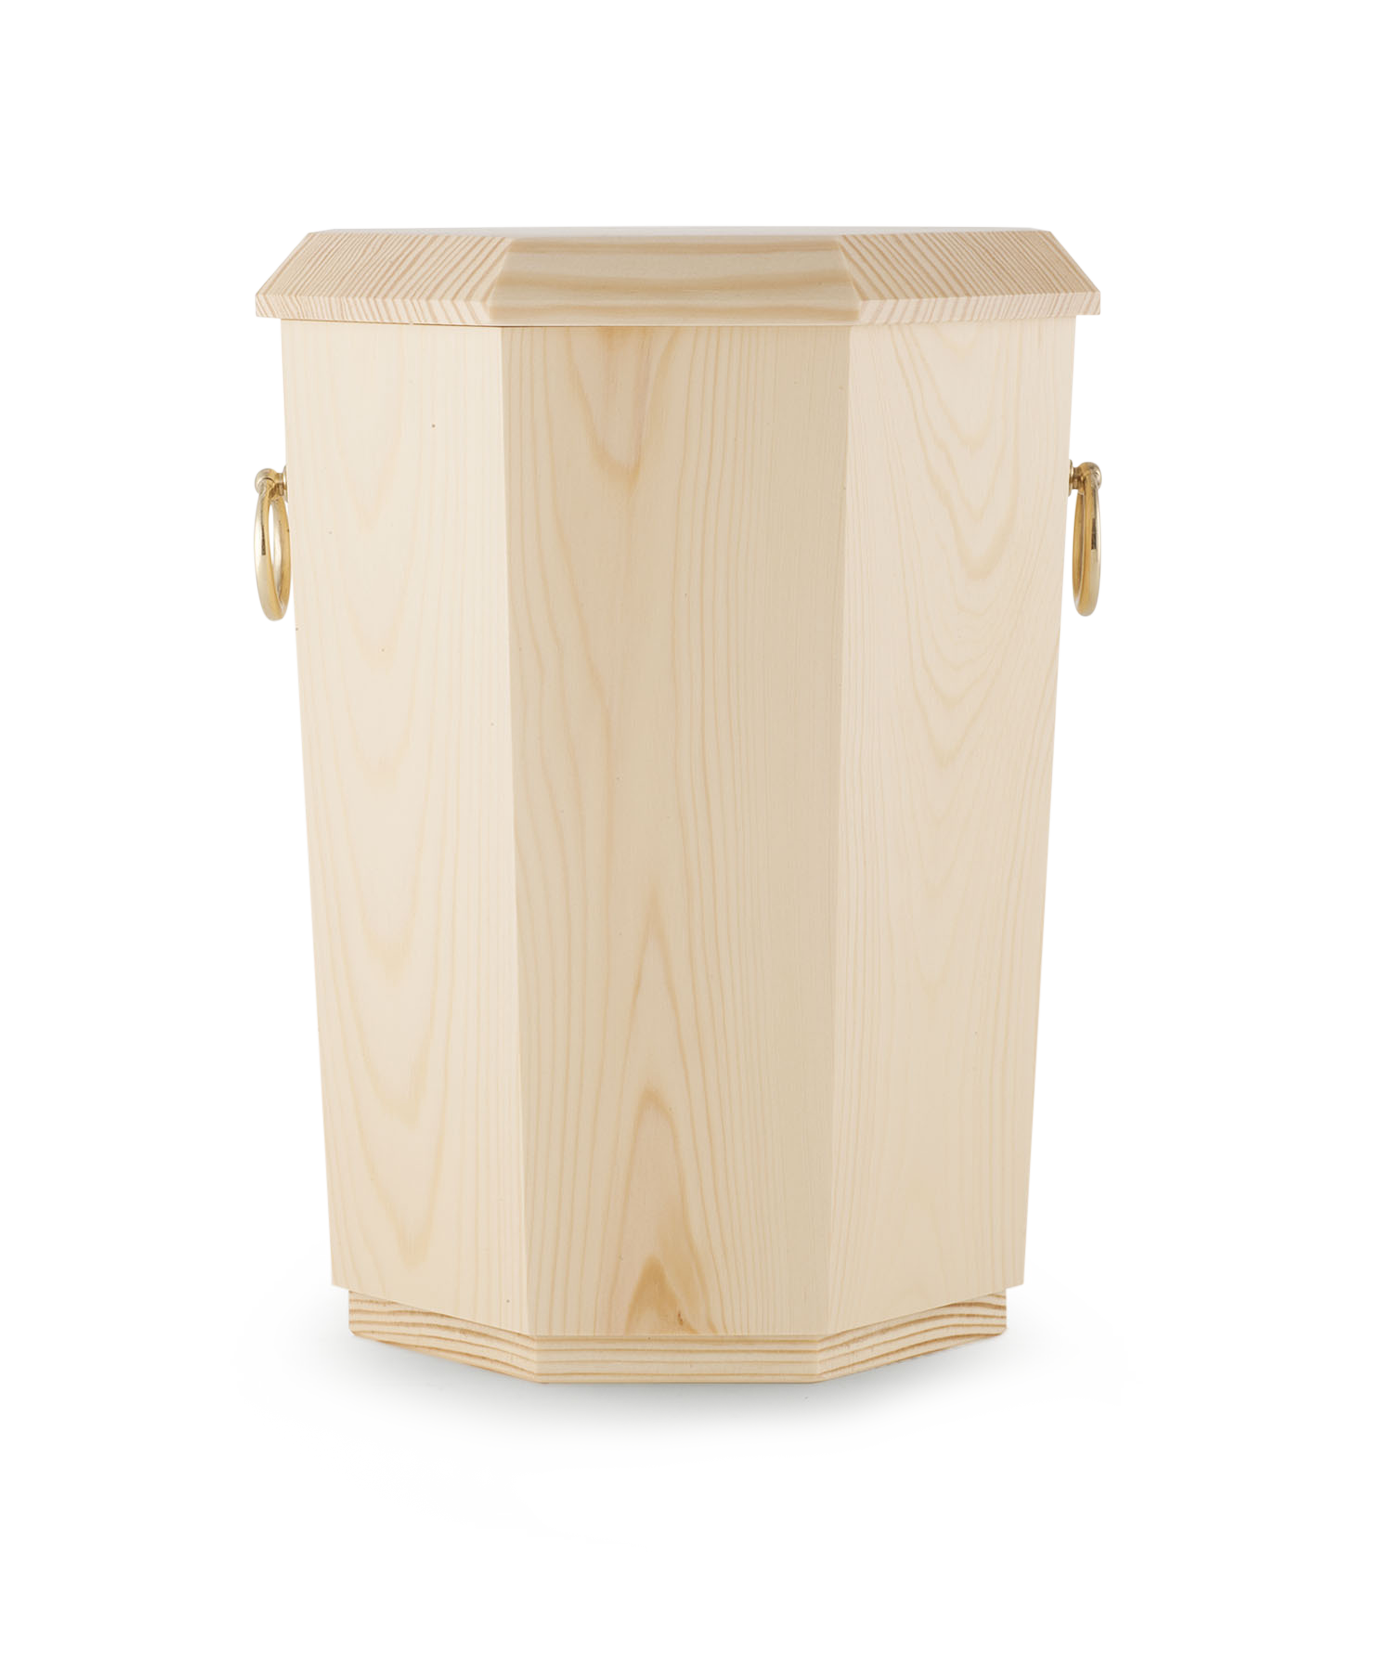 Völsing urn classic with handles wood - 0